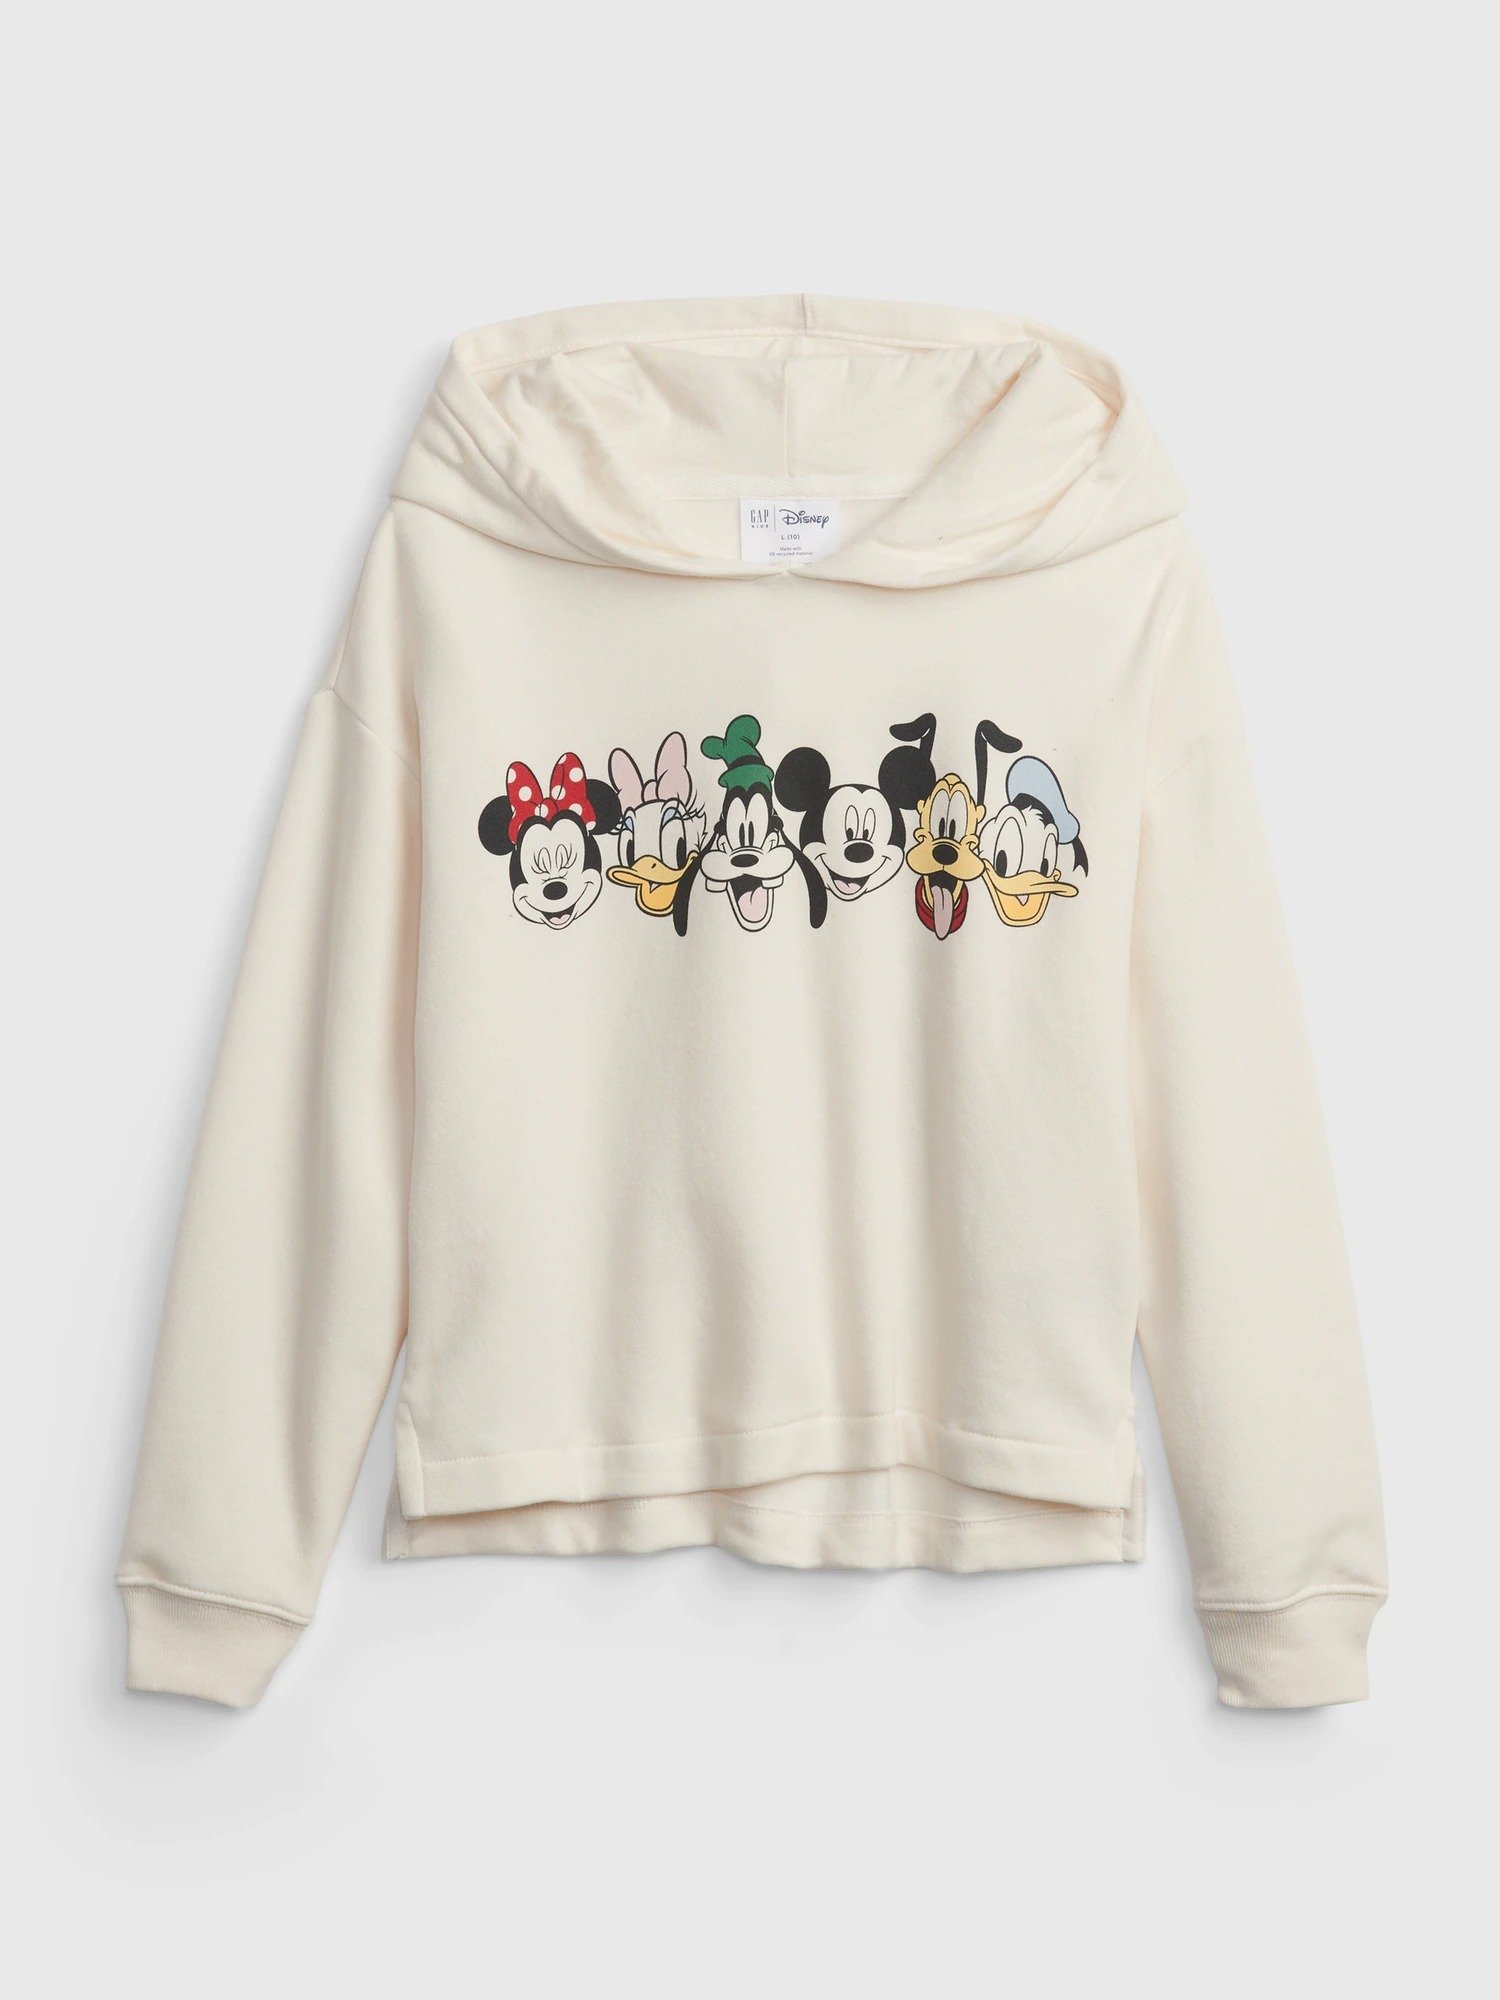 Disney Friends Sweatshirt product image